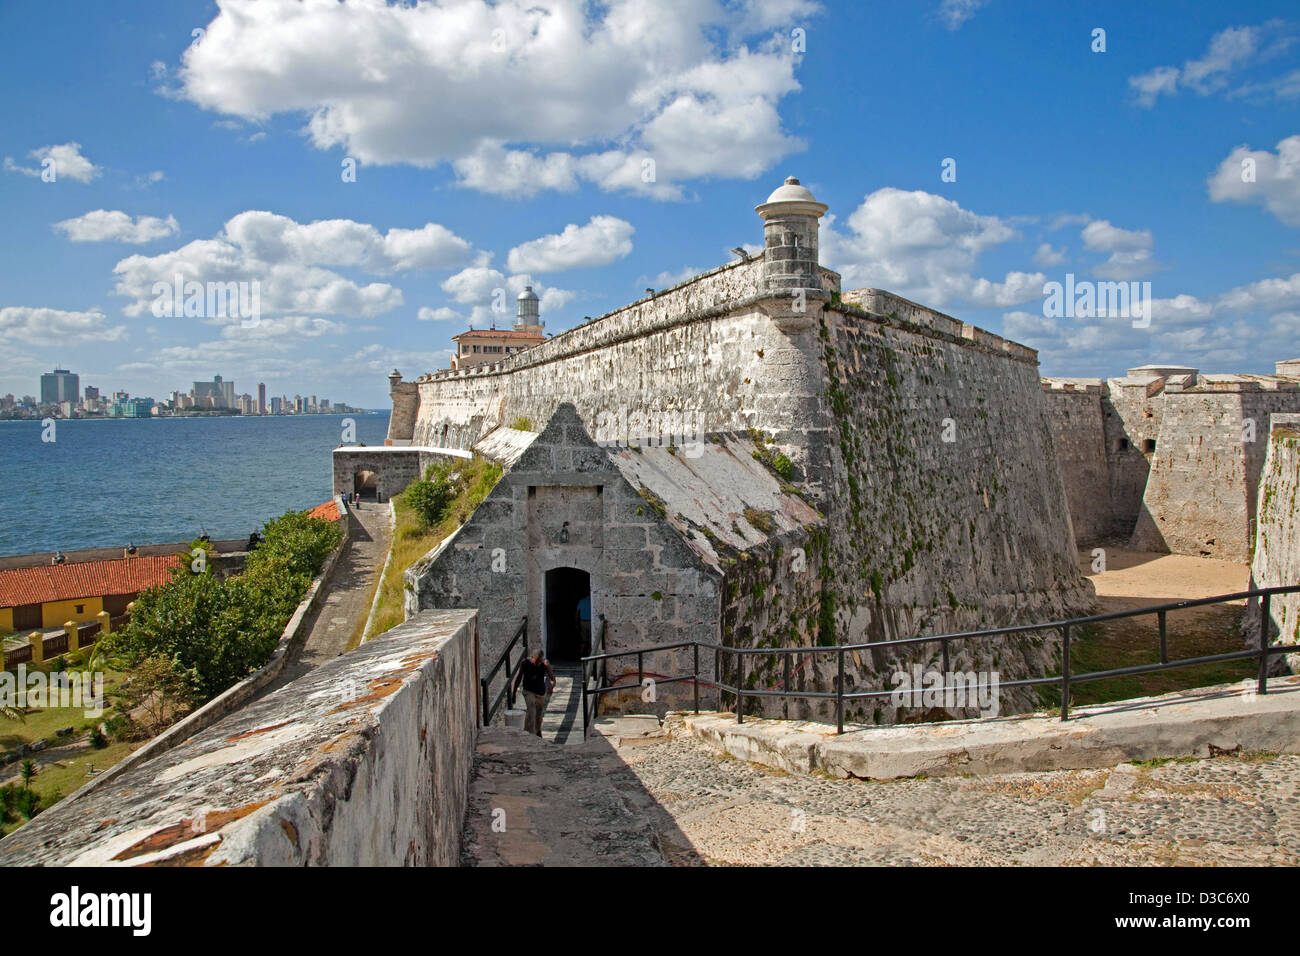 Le Château del Morro / Castillo de los Tres Reyes Magos del Morro, la forteresse qui garde l'entrée de la baie de La Havane, Cuba, Caraïbes Banque D'Images